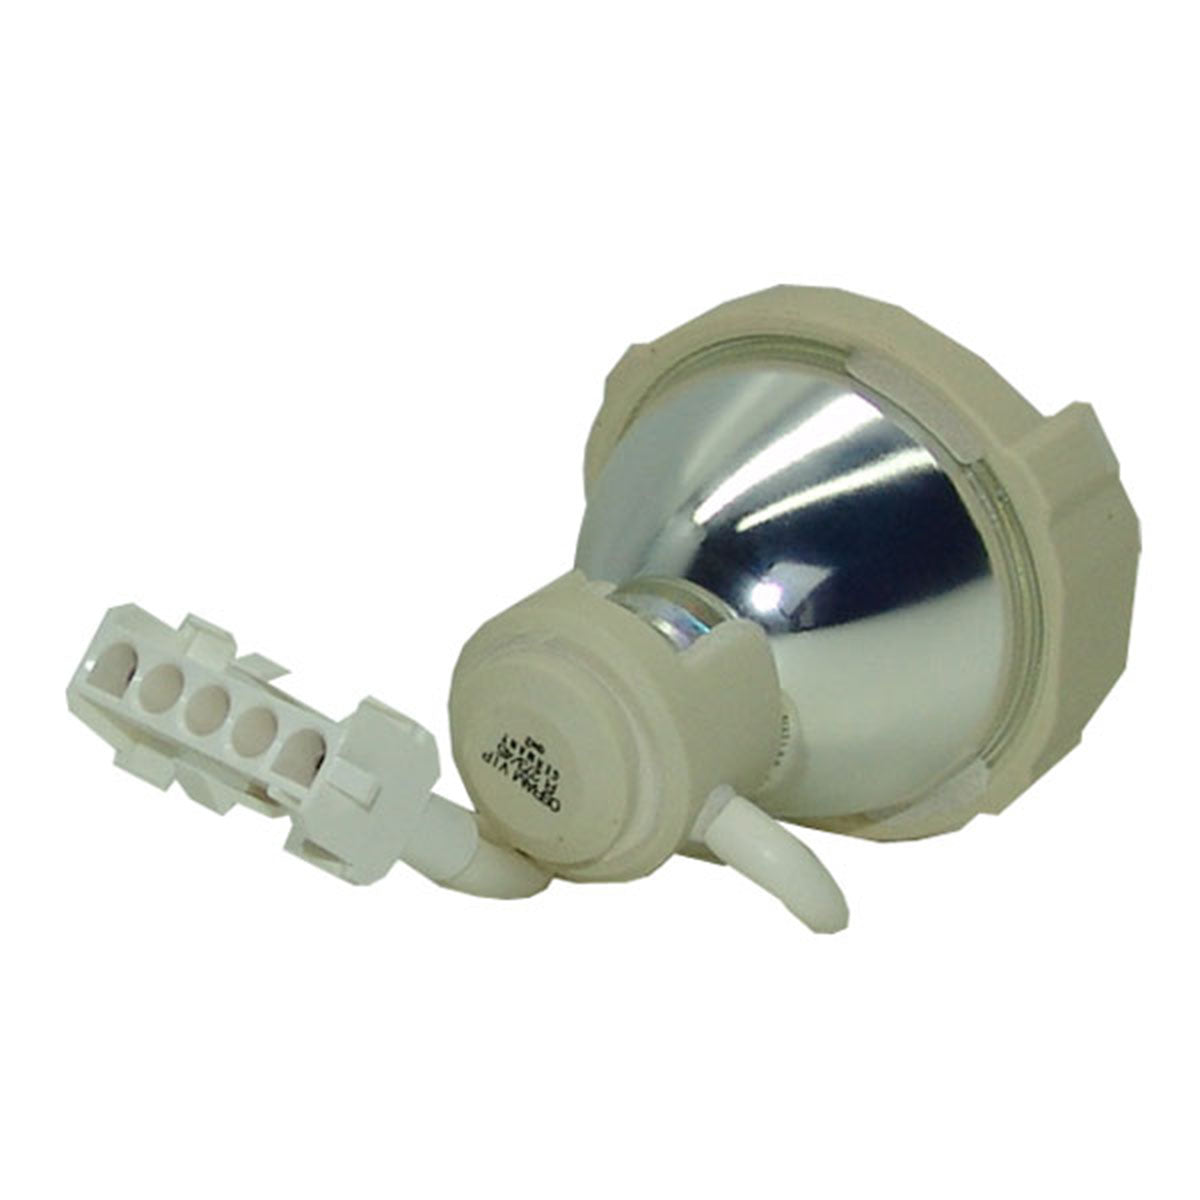 PLUS 28-861 Osram Projector Bare Lamp